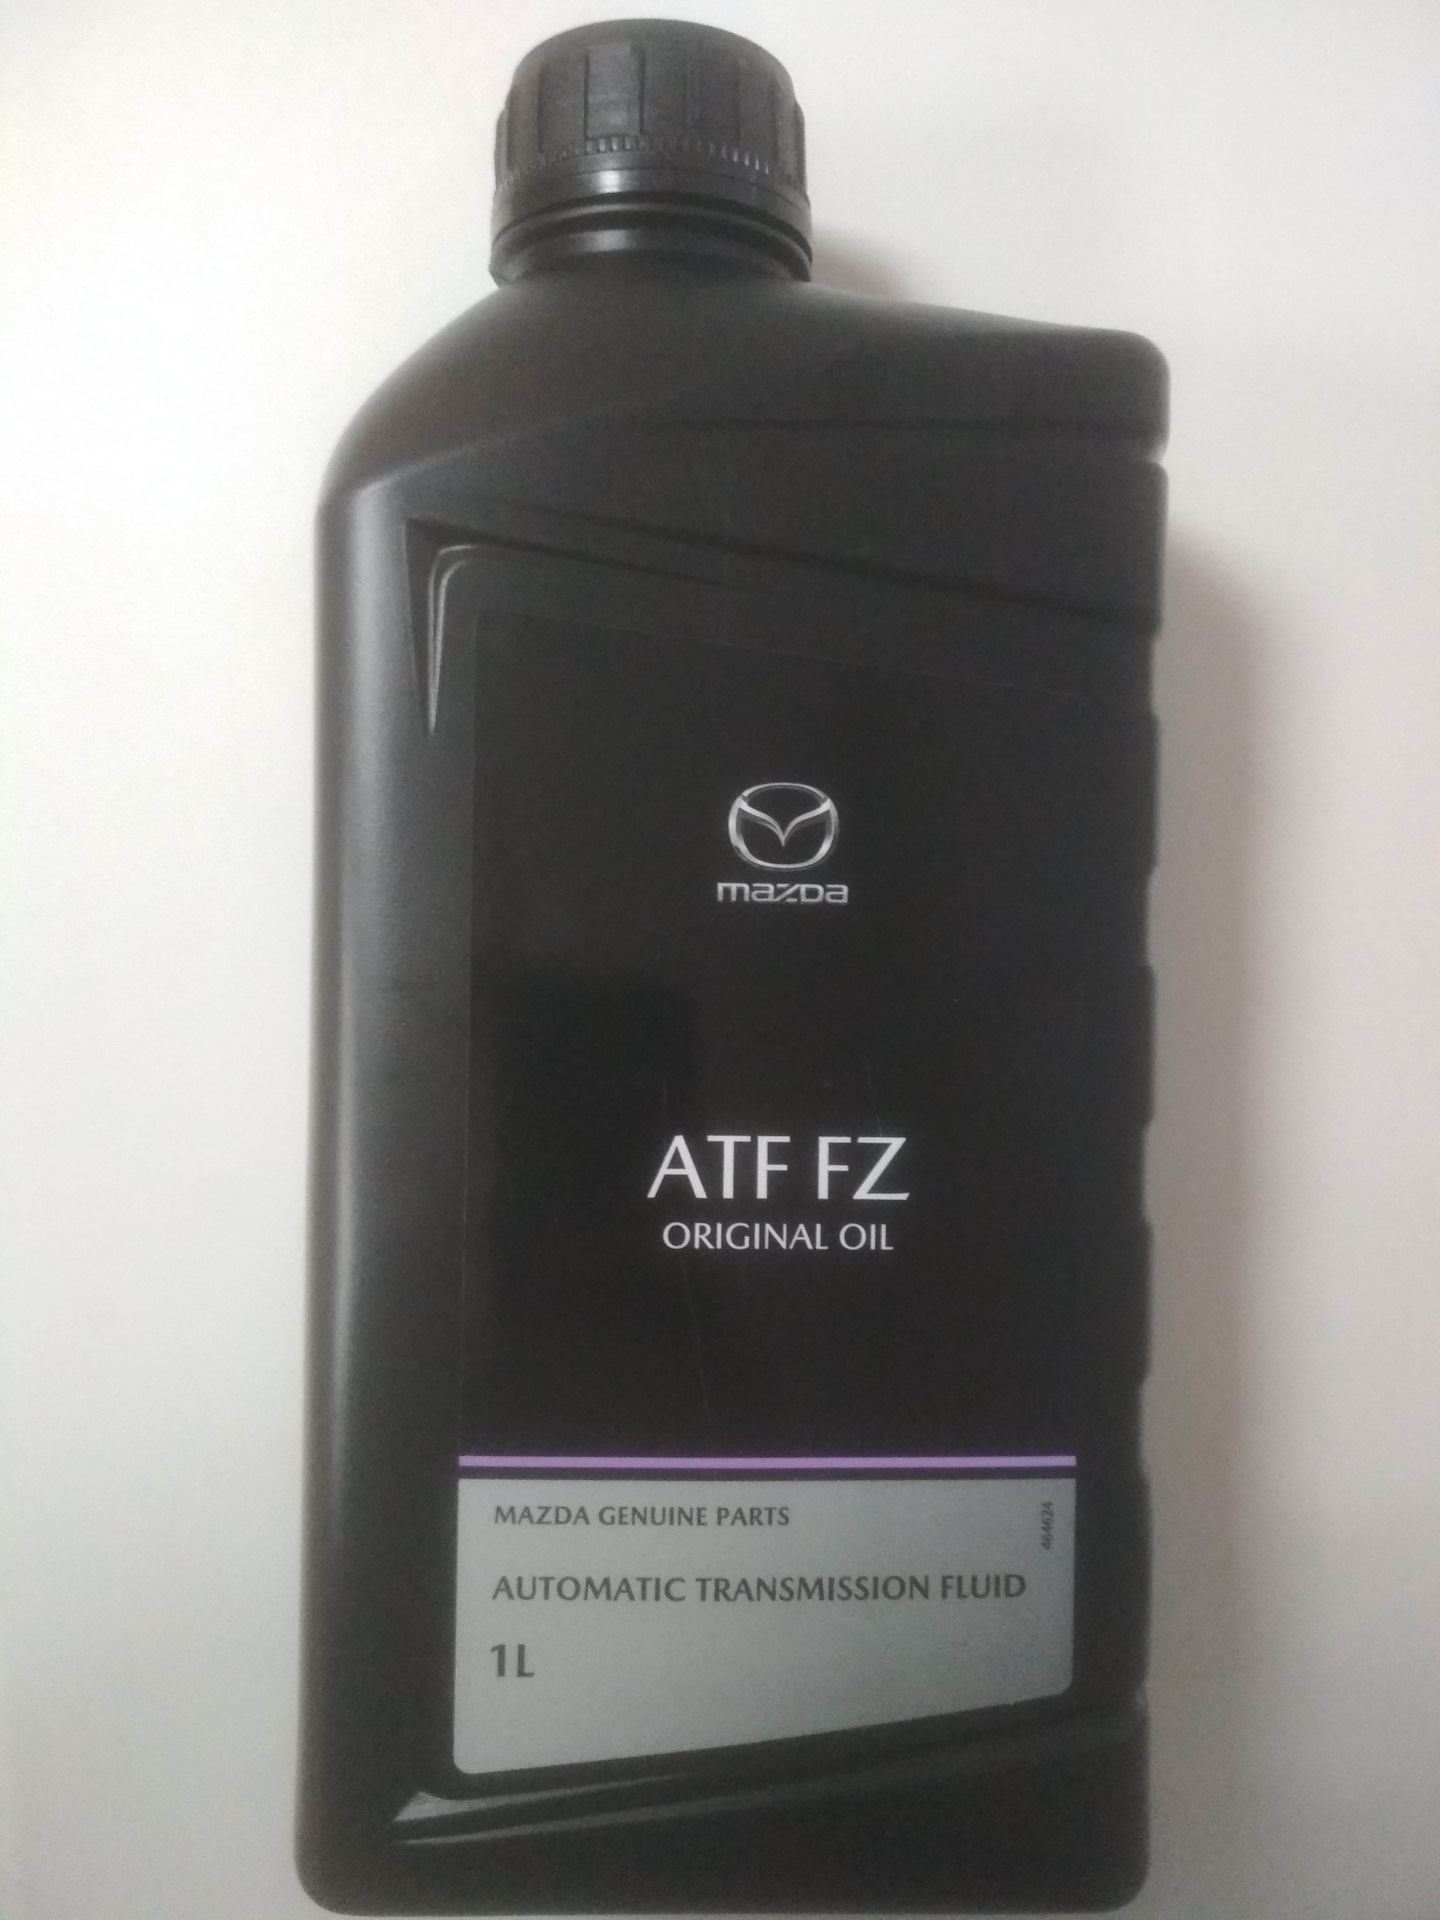 Mazda ATF FZ. Mazda ATF 6. Mazda ATF FZ 4 литра артикул. Mazda ATF 20l. Масло трансмиссионное atf fz